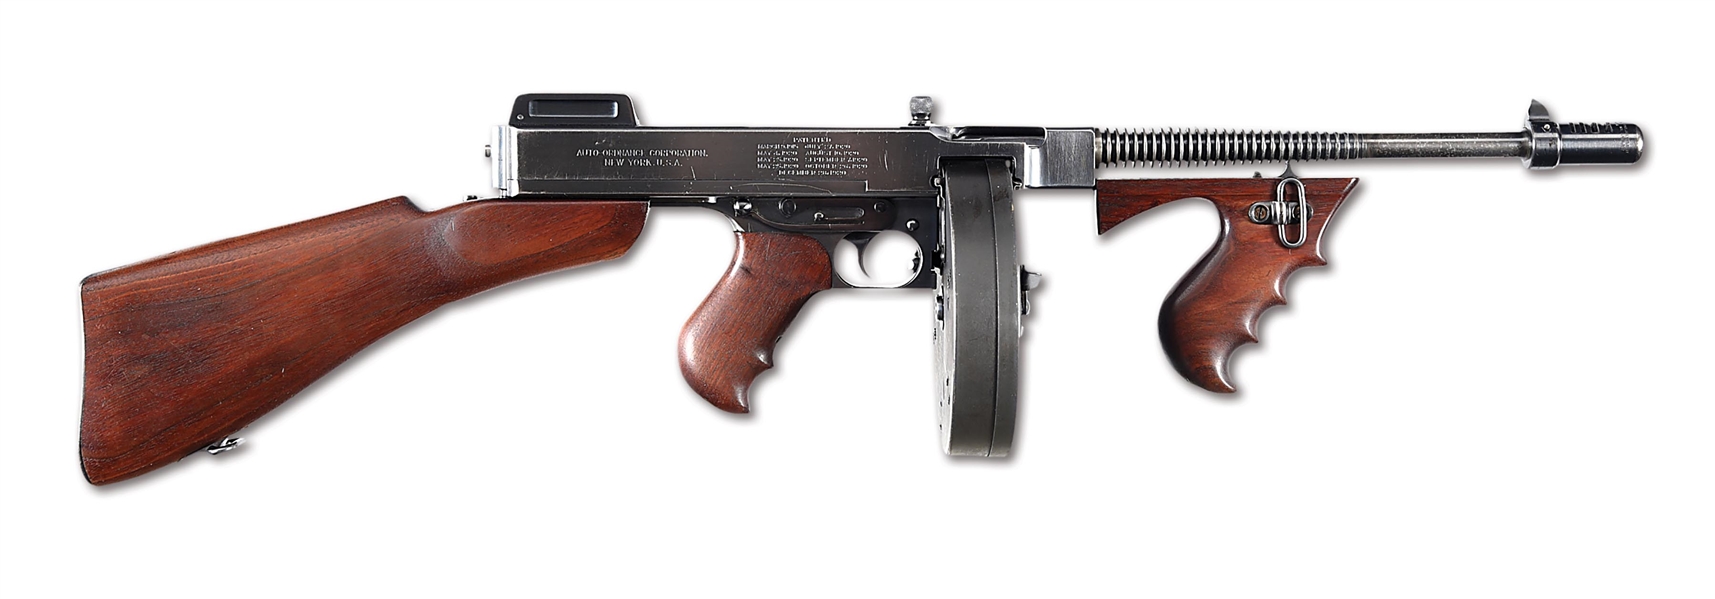 (N) COLT MODEL 1921/1928 OVERSTAMP THOMPSON MACHINE GUN PRESENTED TO THE EL CERRITO POLICE BY THE AMERICAN LEGION (CURIO & RELIC).